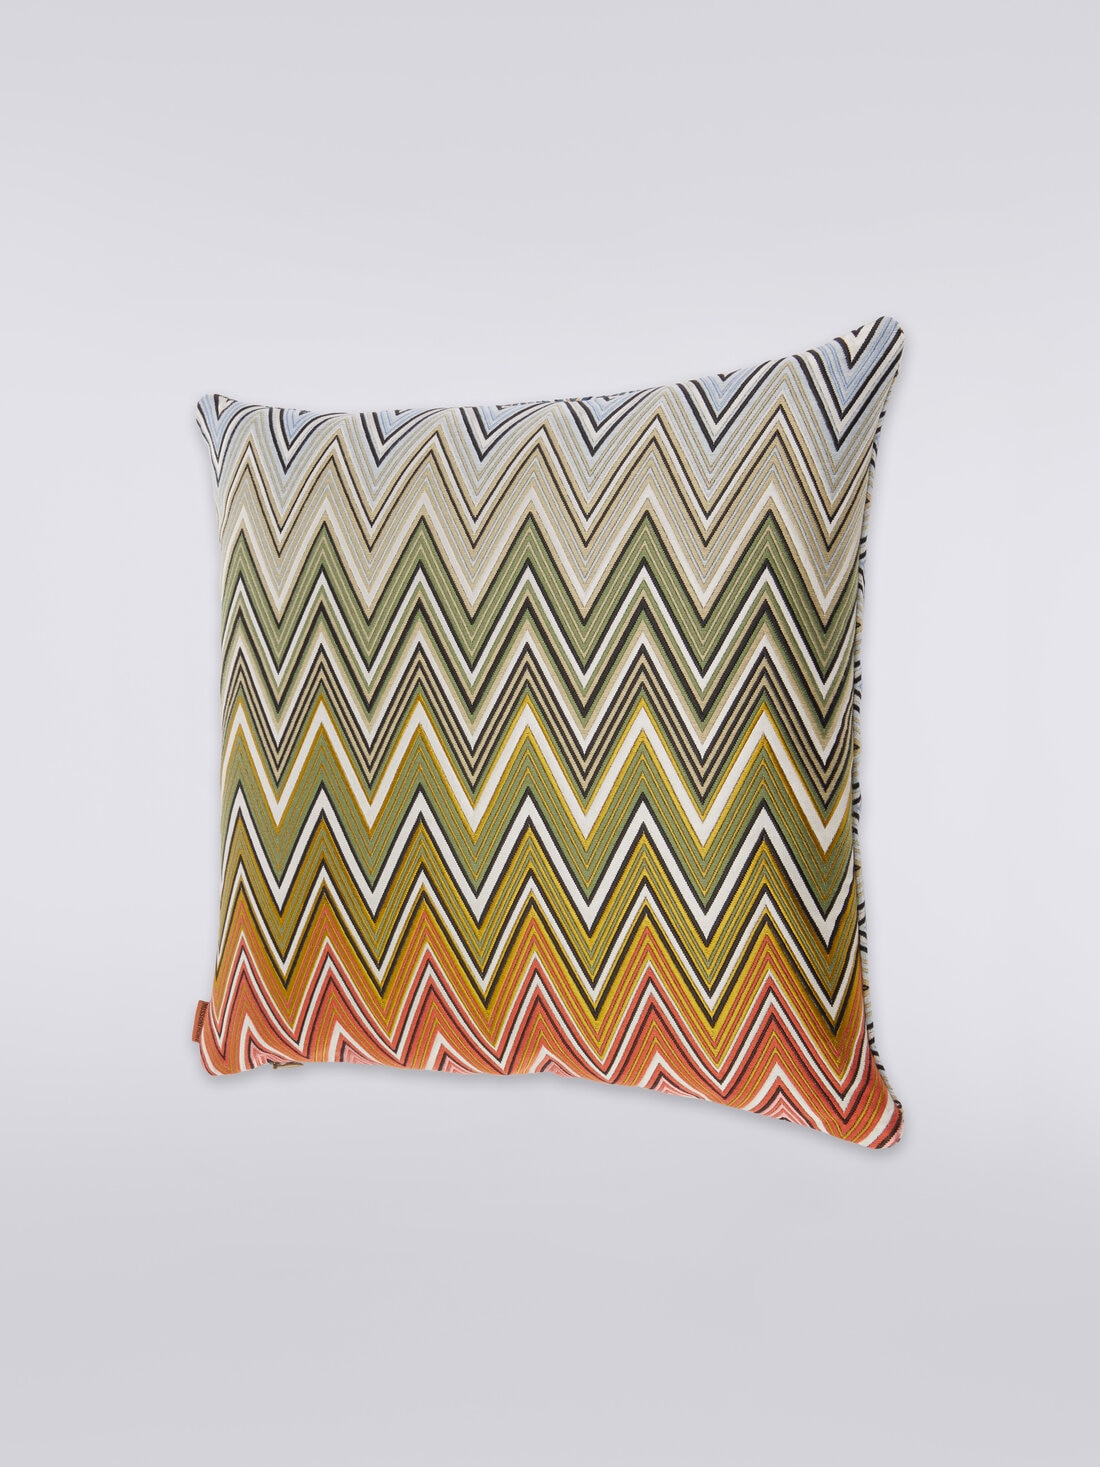 Birmingham PW cushion 40x40 cm, Multicoloured  - 8051275581260 - 1